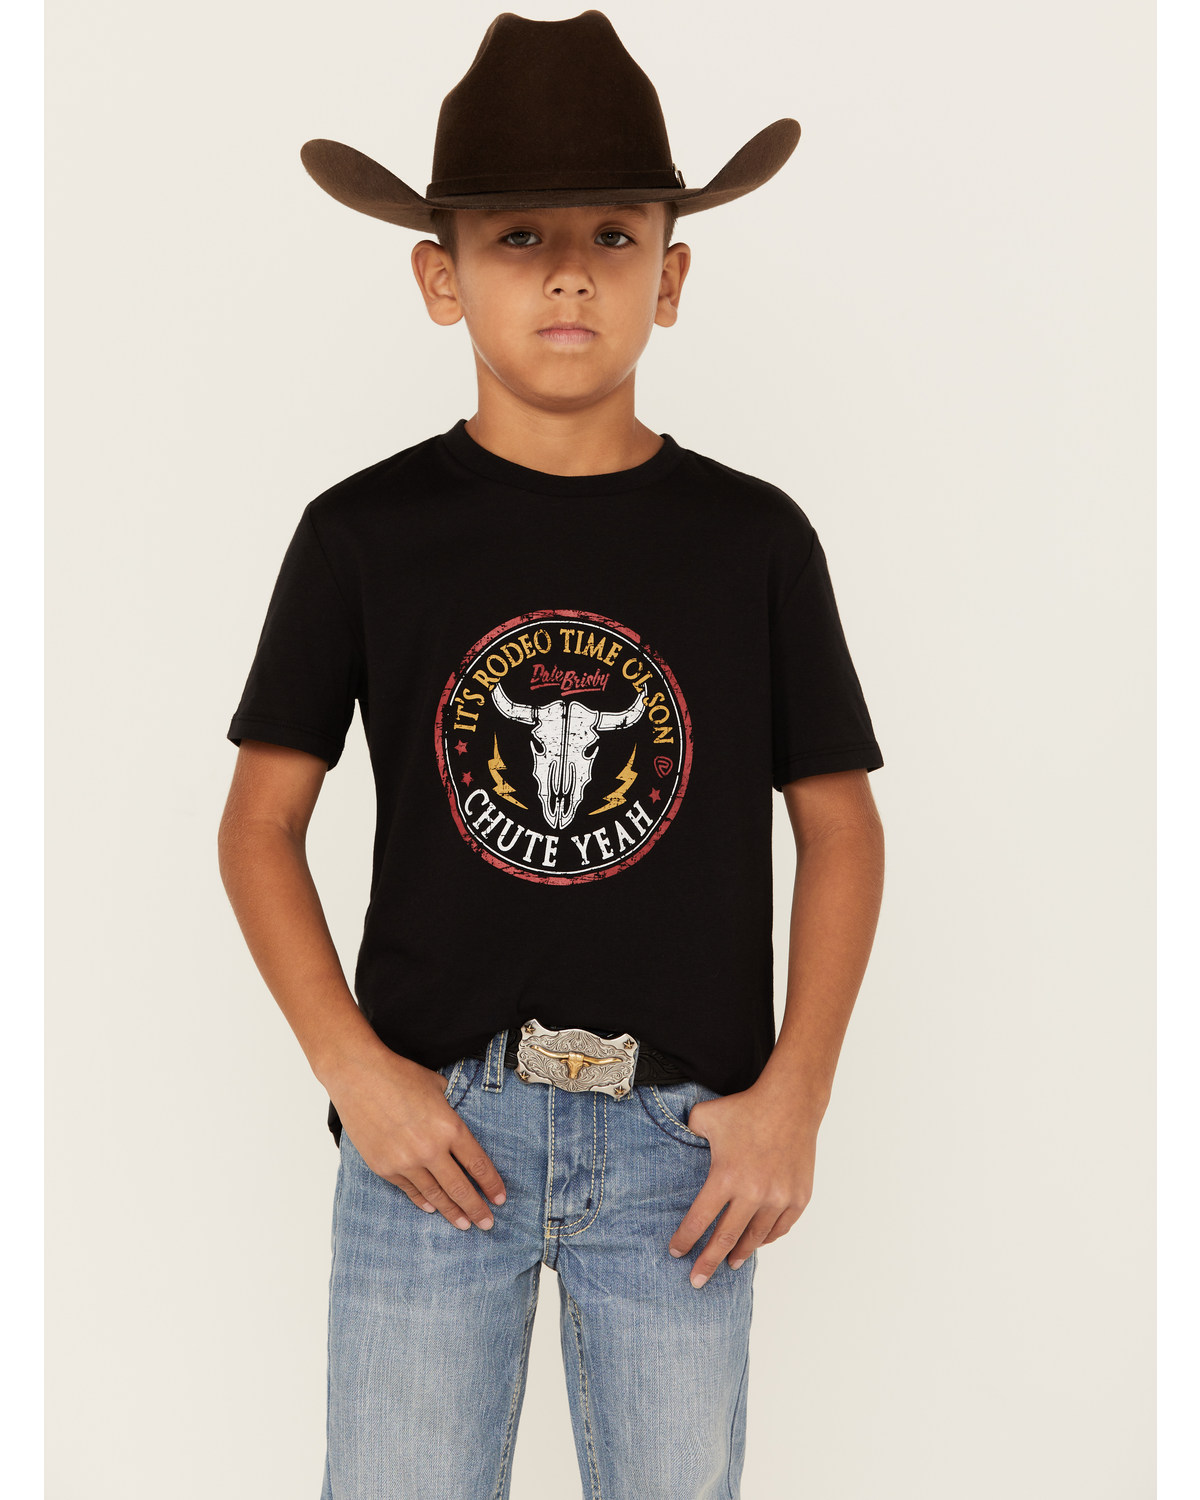 Rock & Roll Denim Boys' Dale Brisby Chute Yeah Steer Head Short Sleeve Graphic T-Shirt